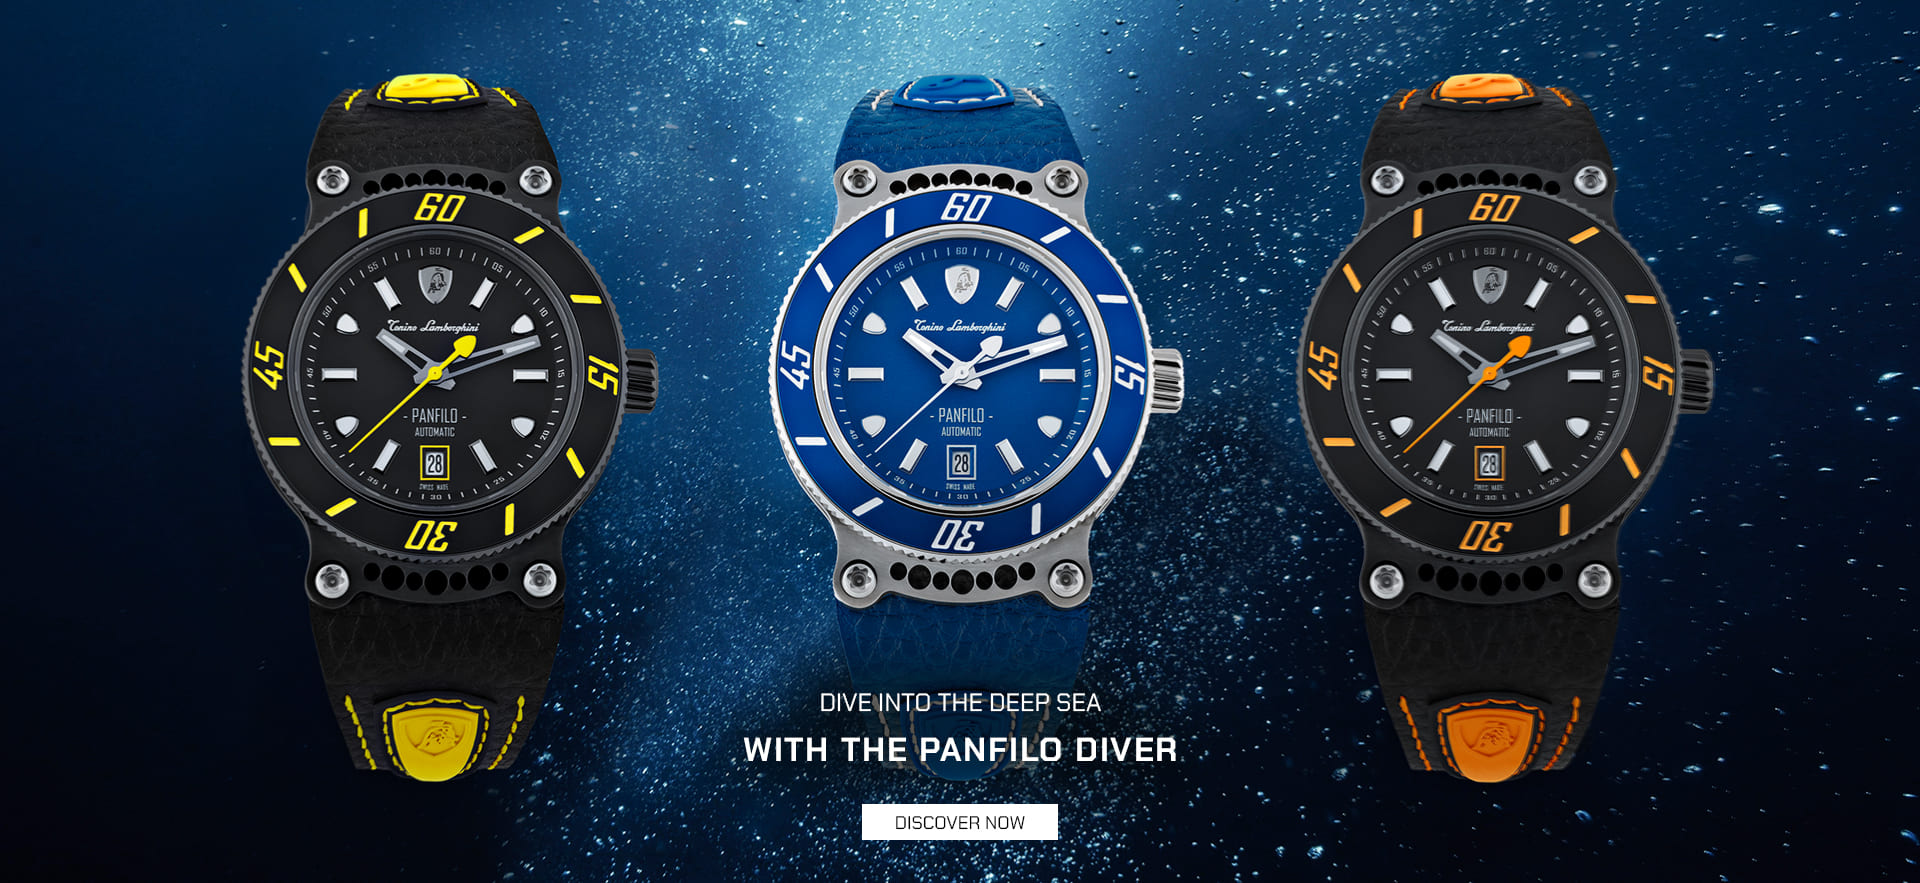 Tonino Lamborghini Panfilo Diver watches. 